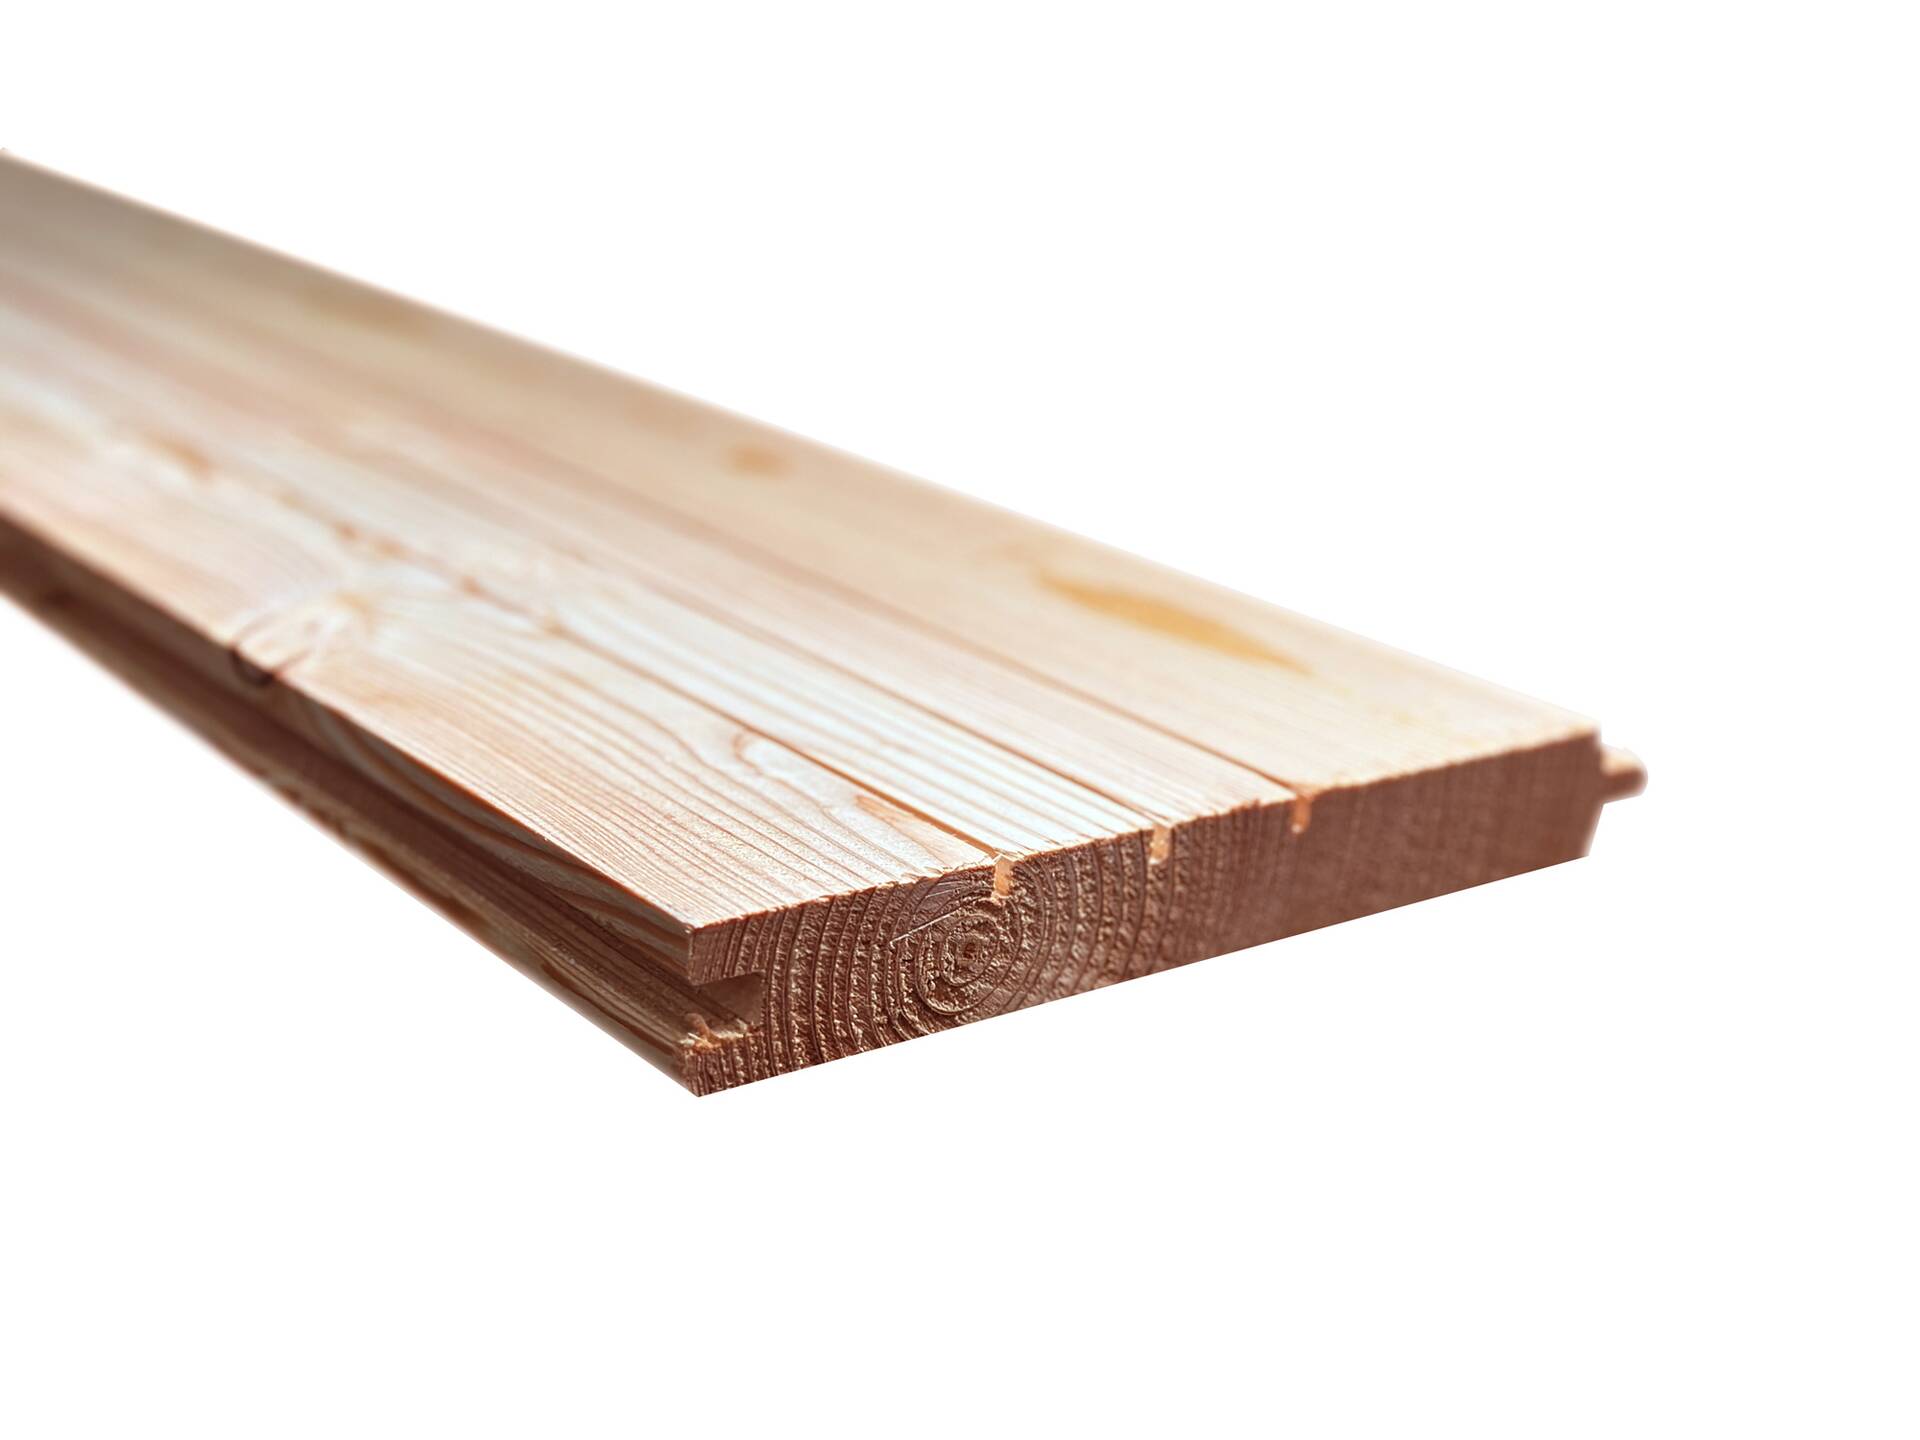 Nut- und Federbretter, Lärche gehobelt, Material Massivholz, verschiedene Längen erhältlich 2.5 Meter